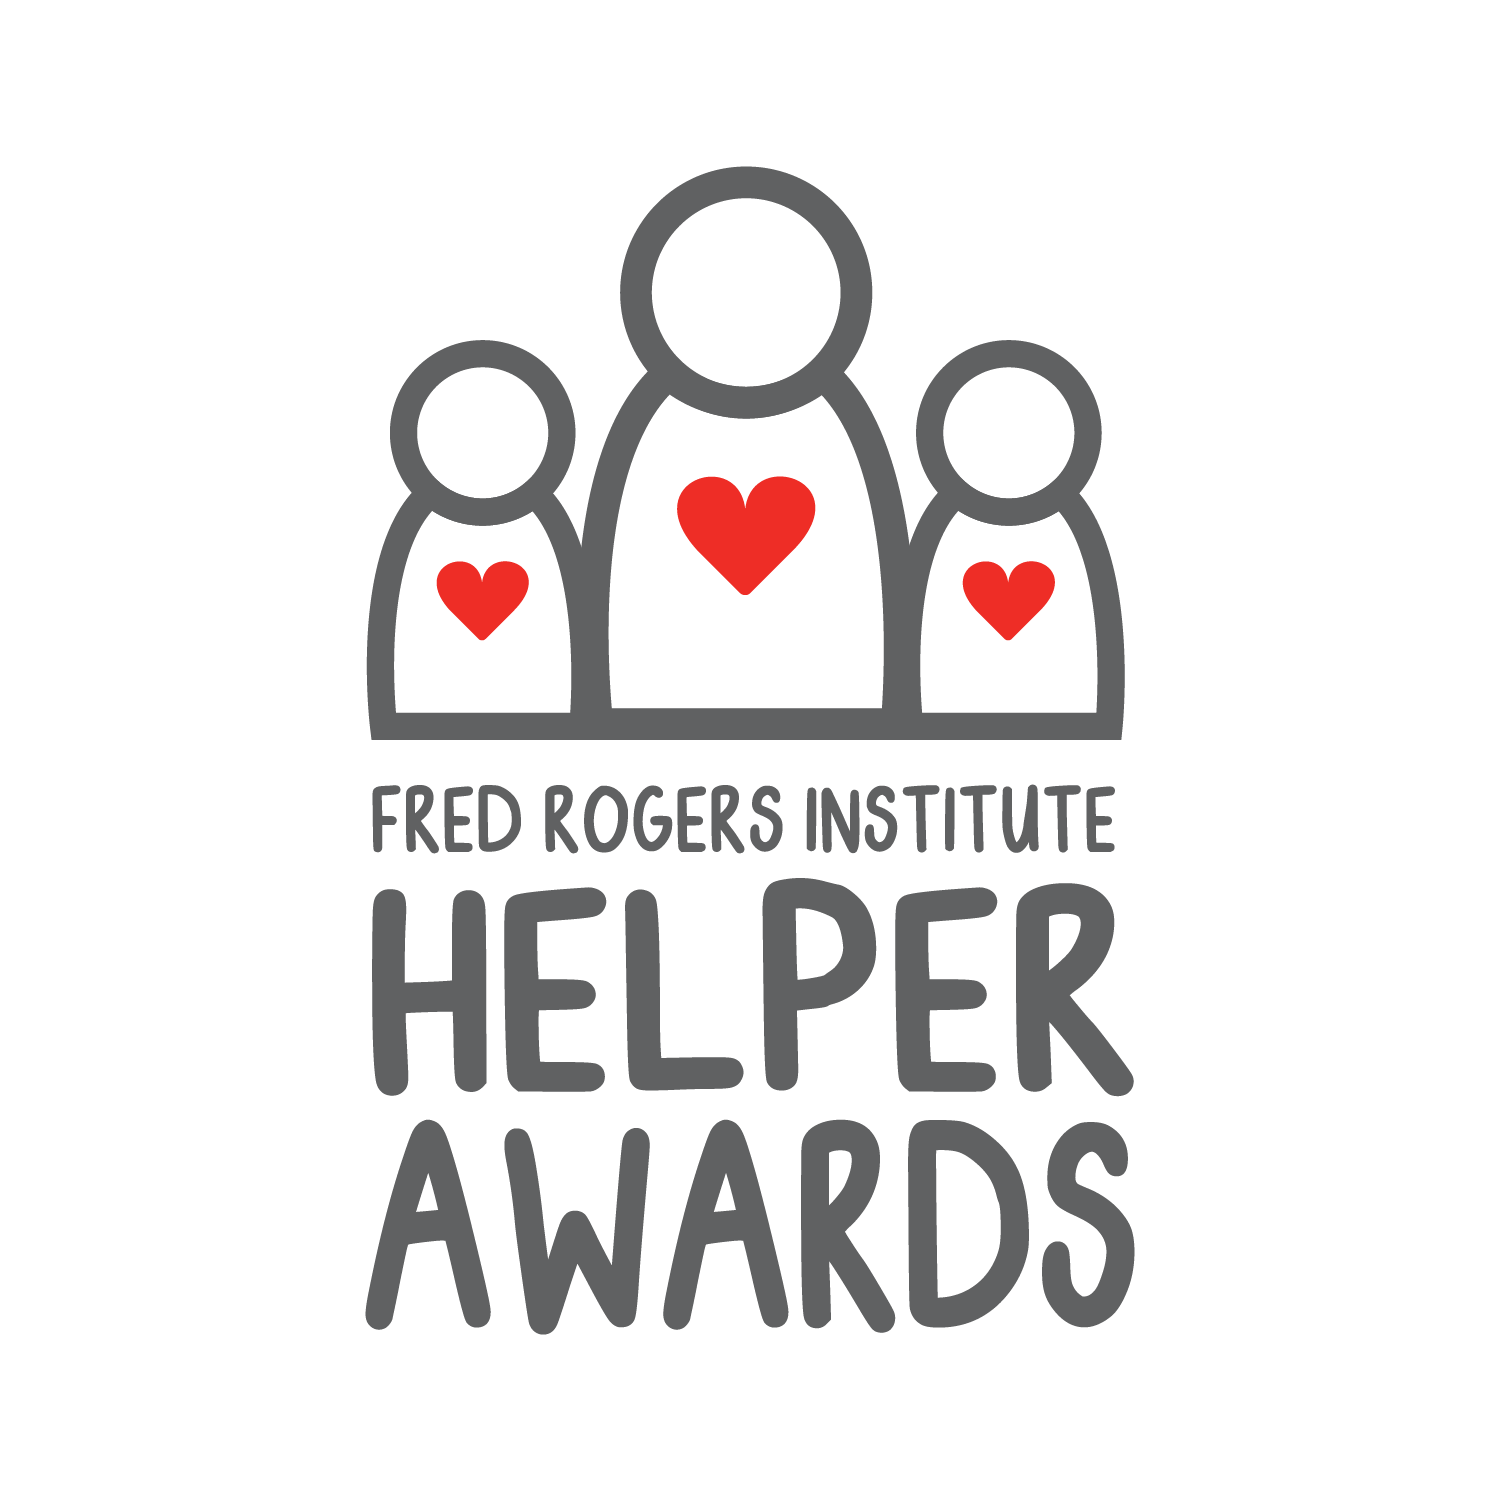 Fred Rogers Institute Helper Awards logo